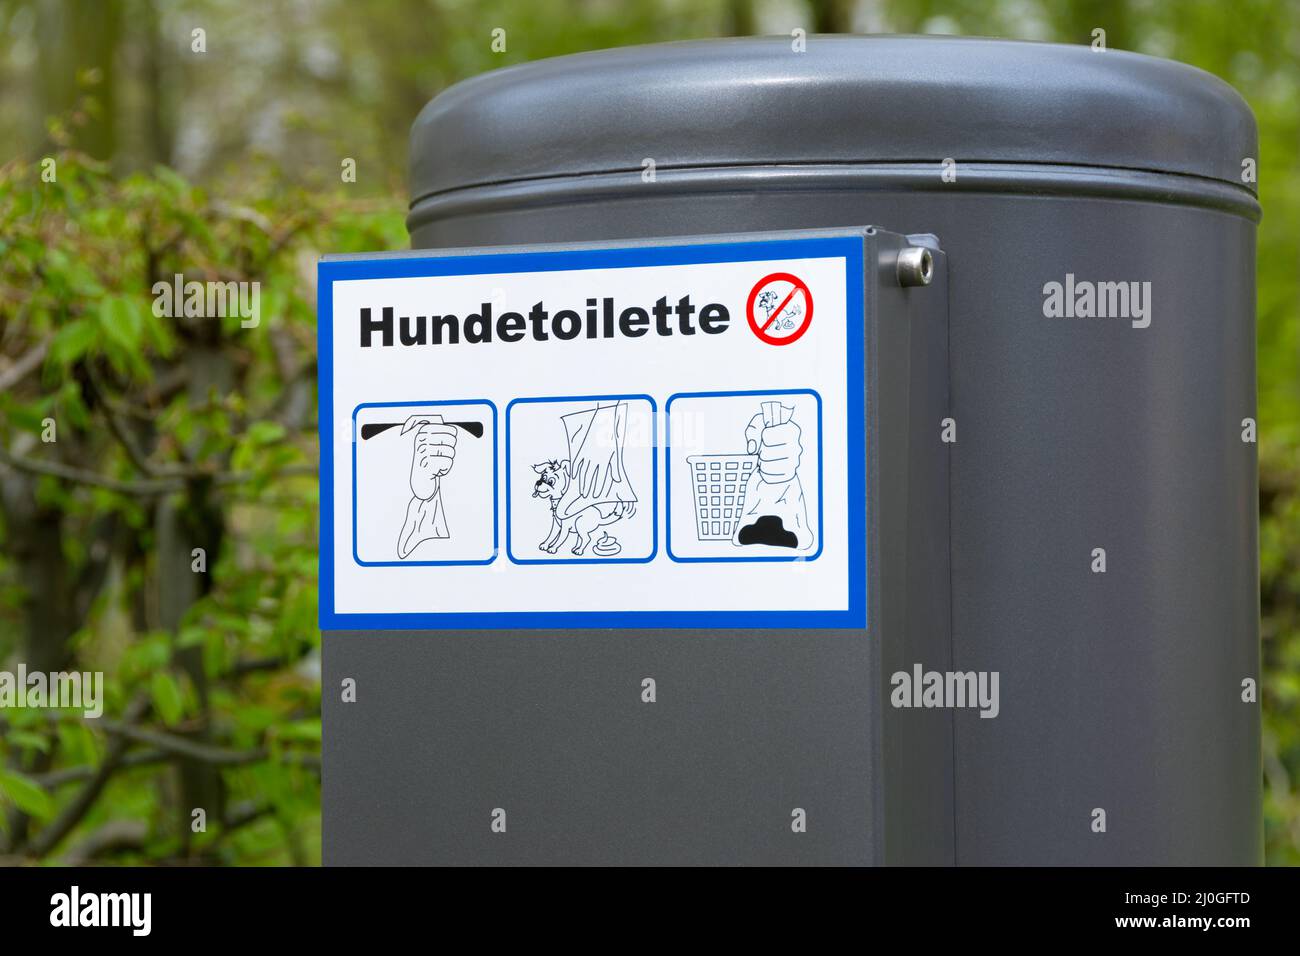 Hundetoilette (Dog toilet) in Germany Stock Photo